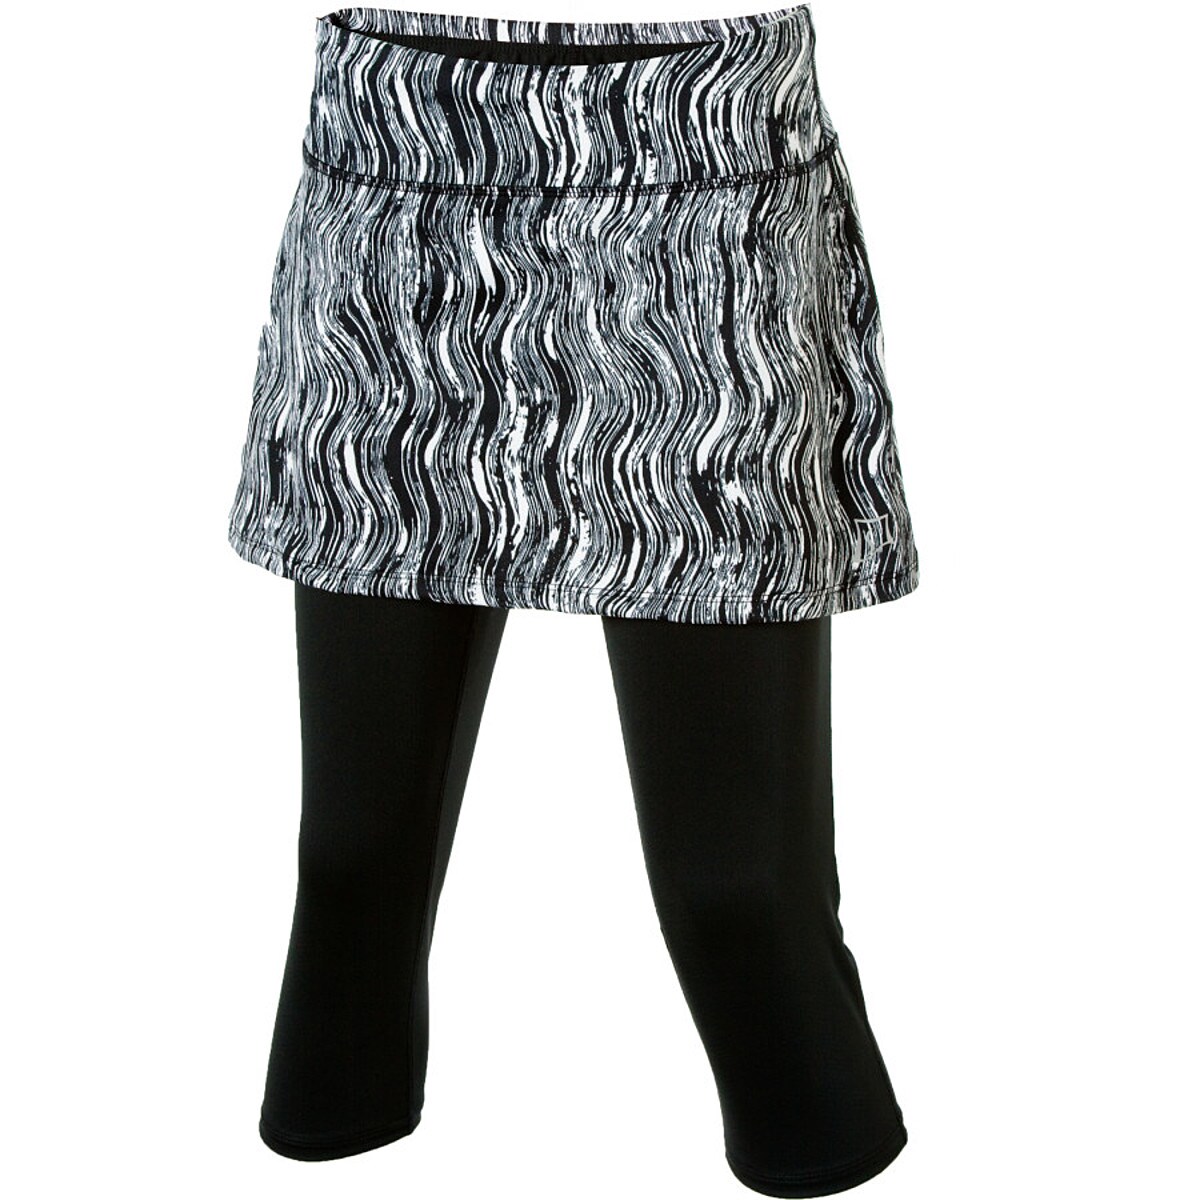 Lotta Breeze Capri Skirt XS only - Skirt Sports